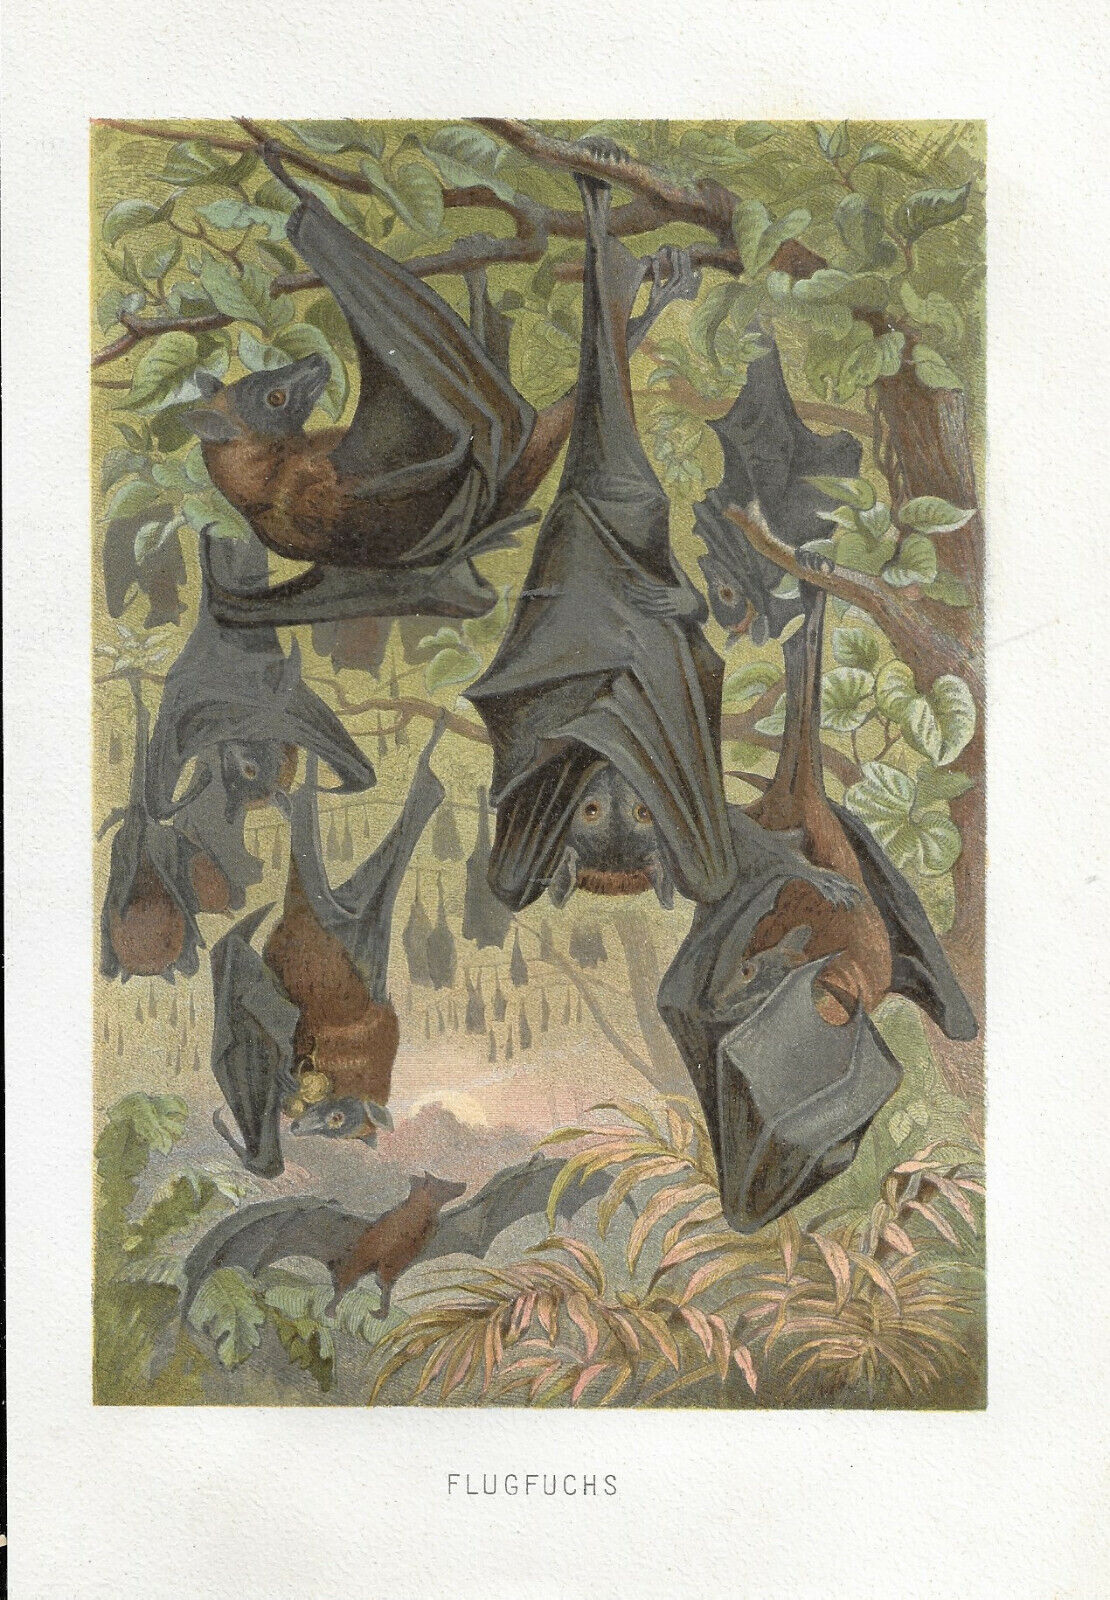 Flugfuchs Flying Fox Farb-Lithographie 1890 - Altes Bild Druck Print Zoologie